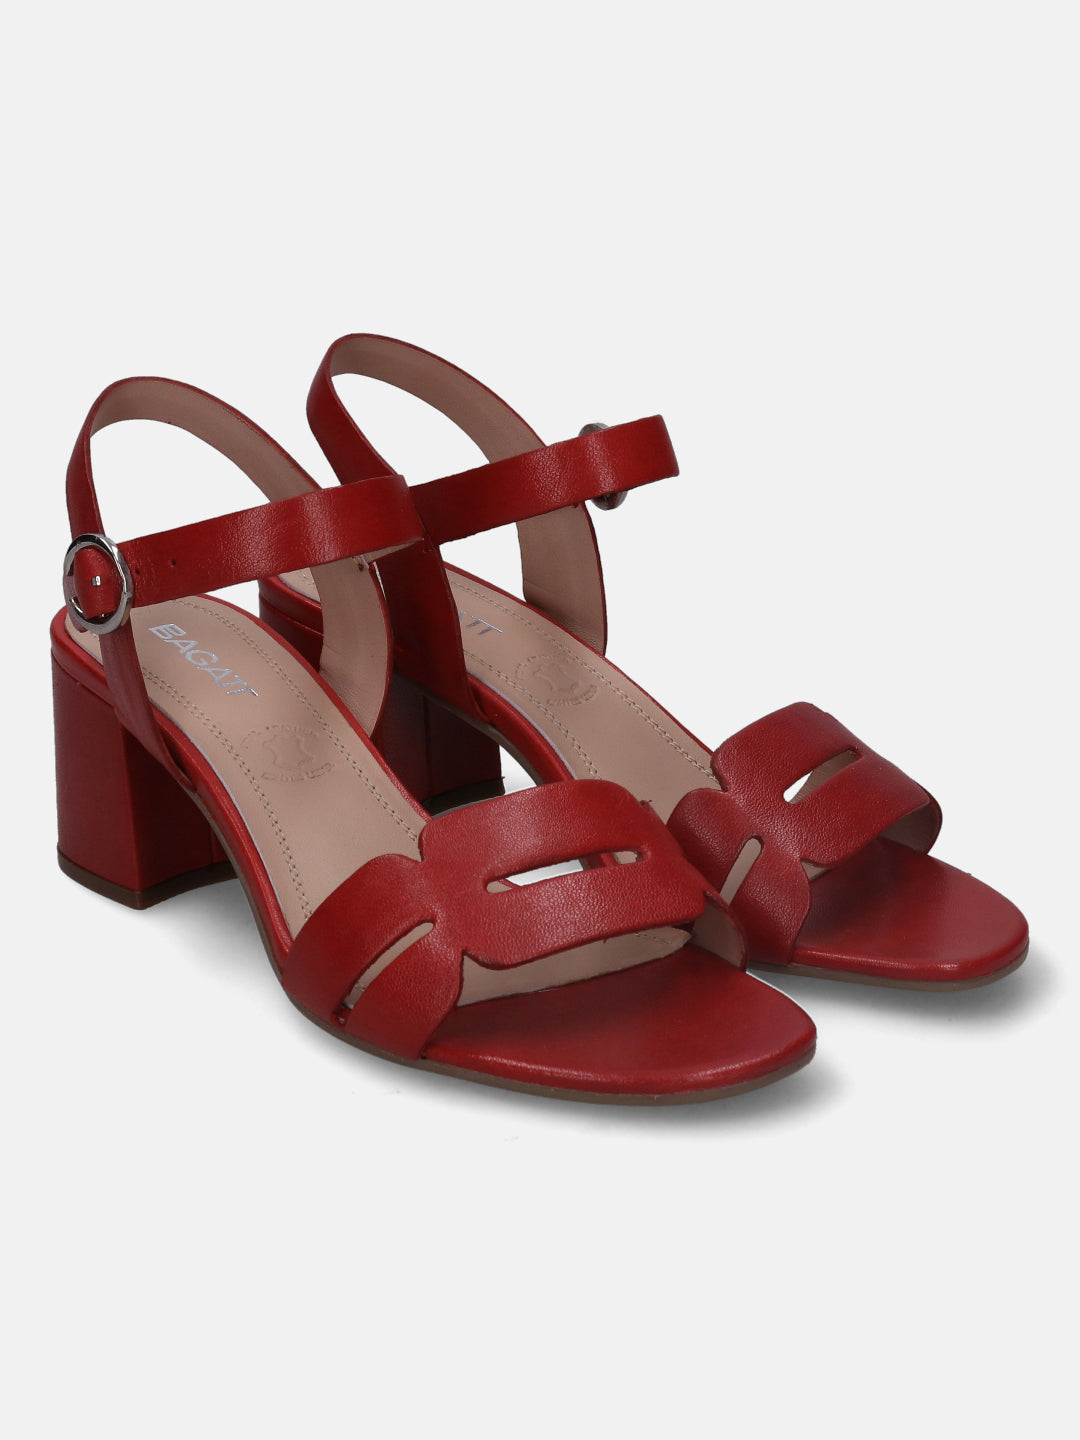 H L STAR Women Red Heels - Buy H L STAR Women Red Heels Online at Best  Price - Shop Online for Footwears in India | Flipkart.com